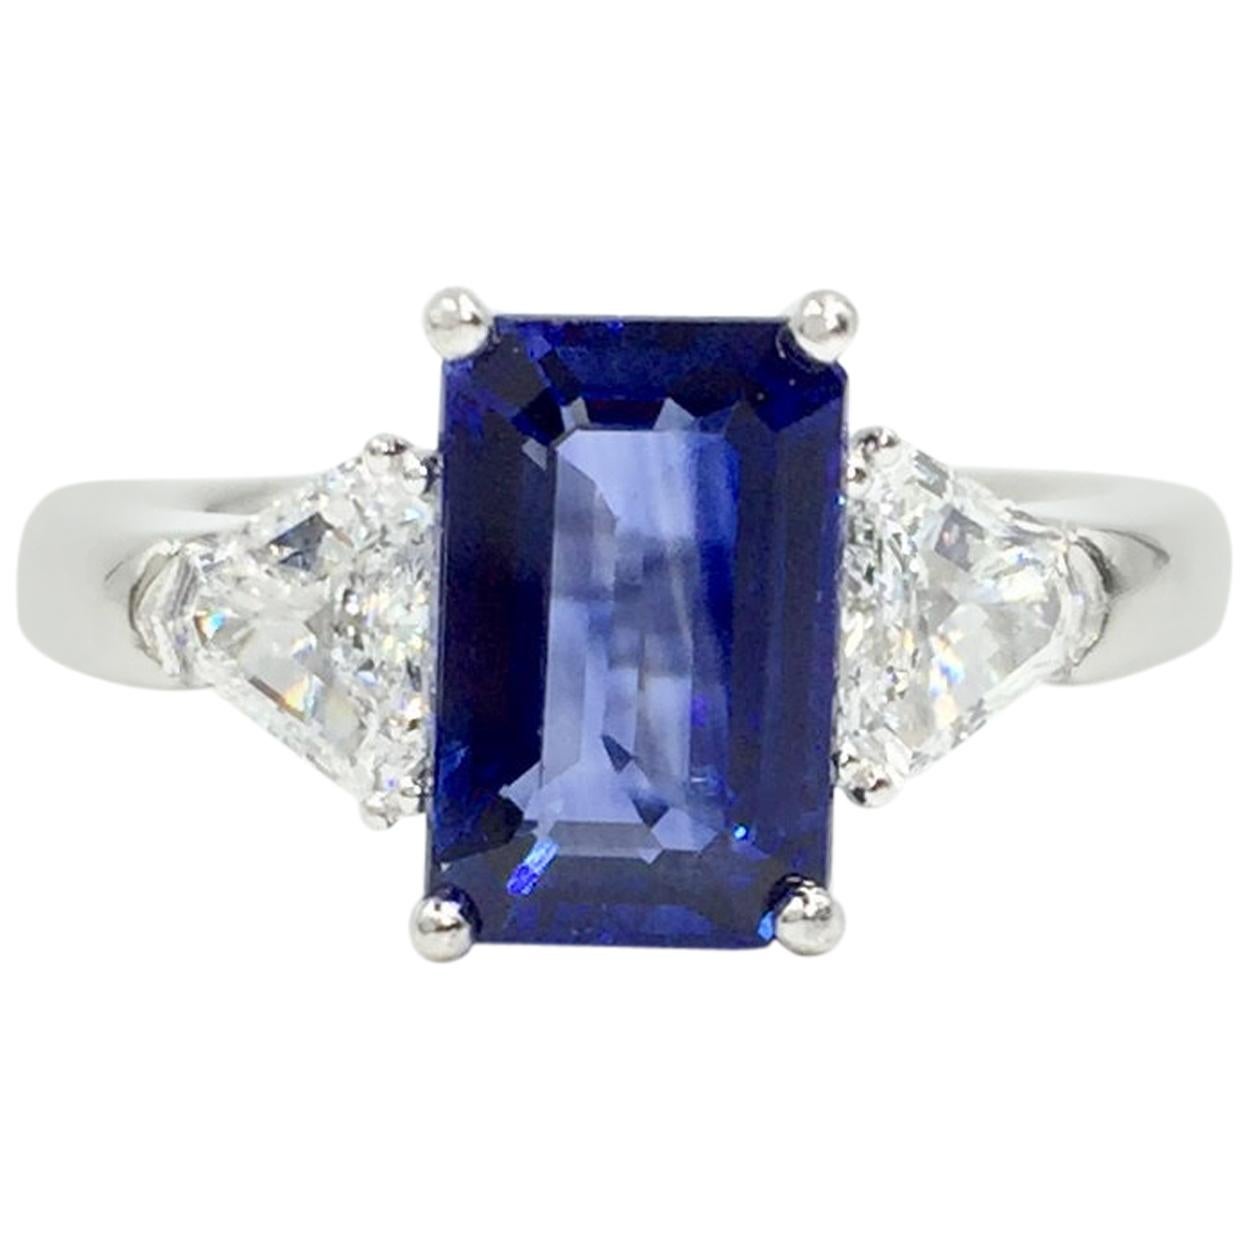 3.13 Carat Blue Sapphire Platinum Ring with Trillion Diamonds